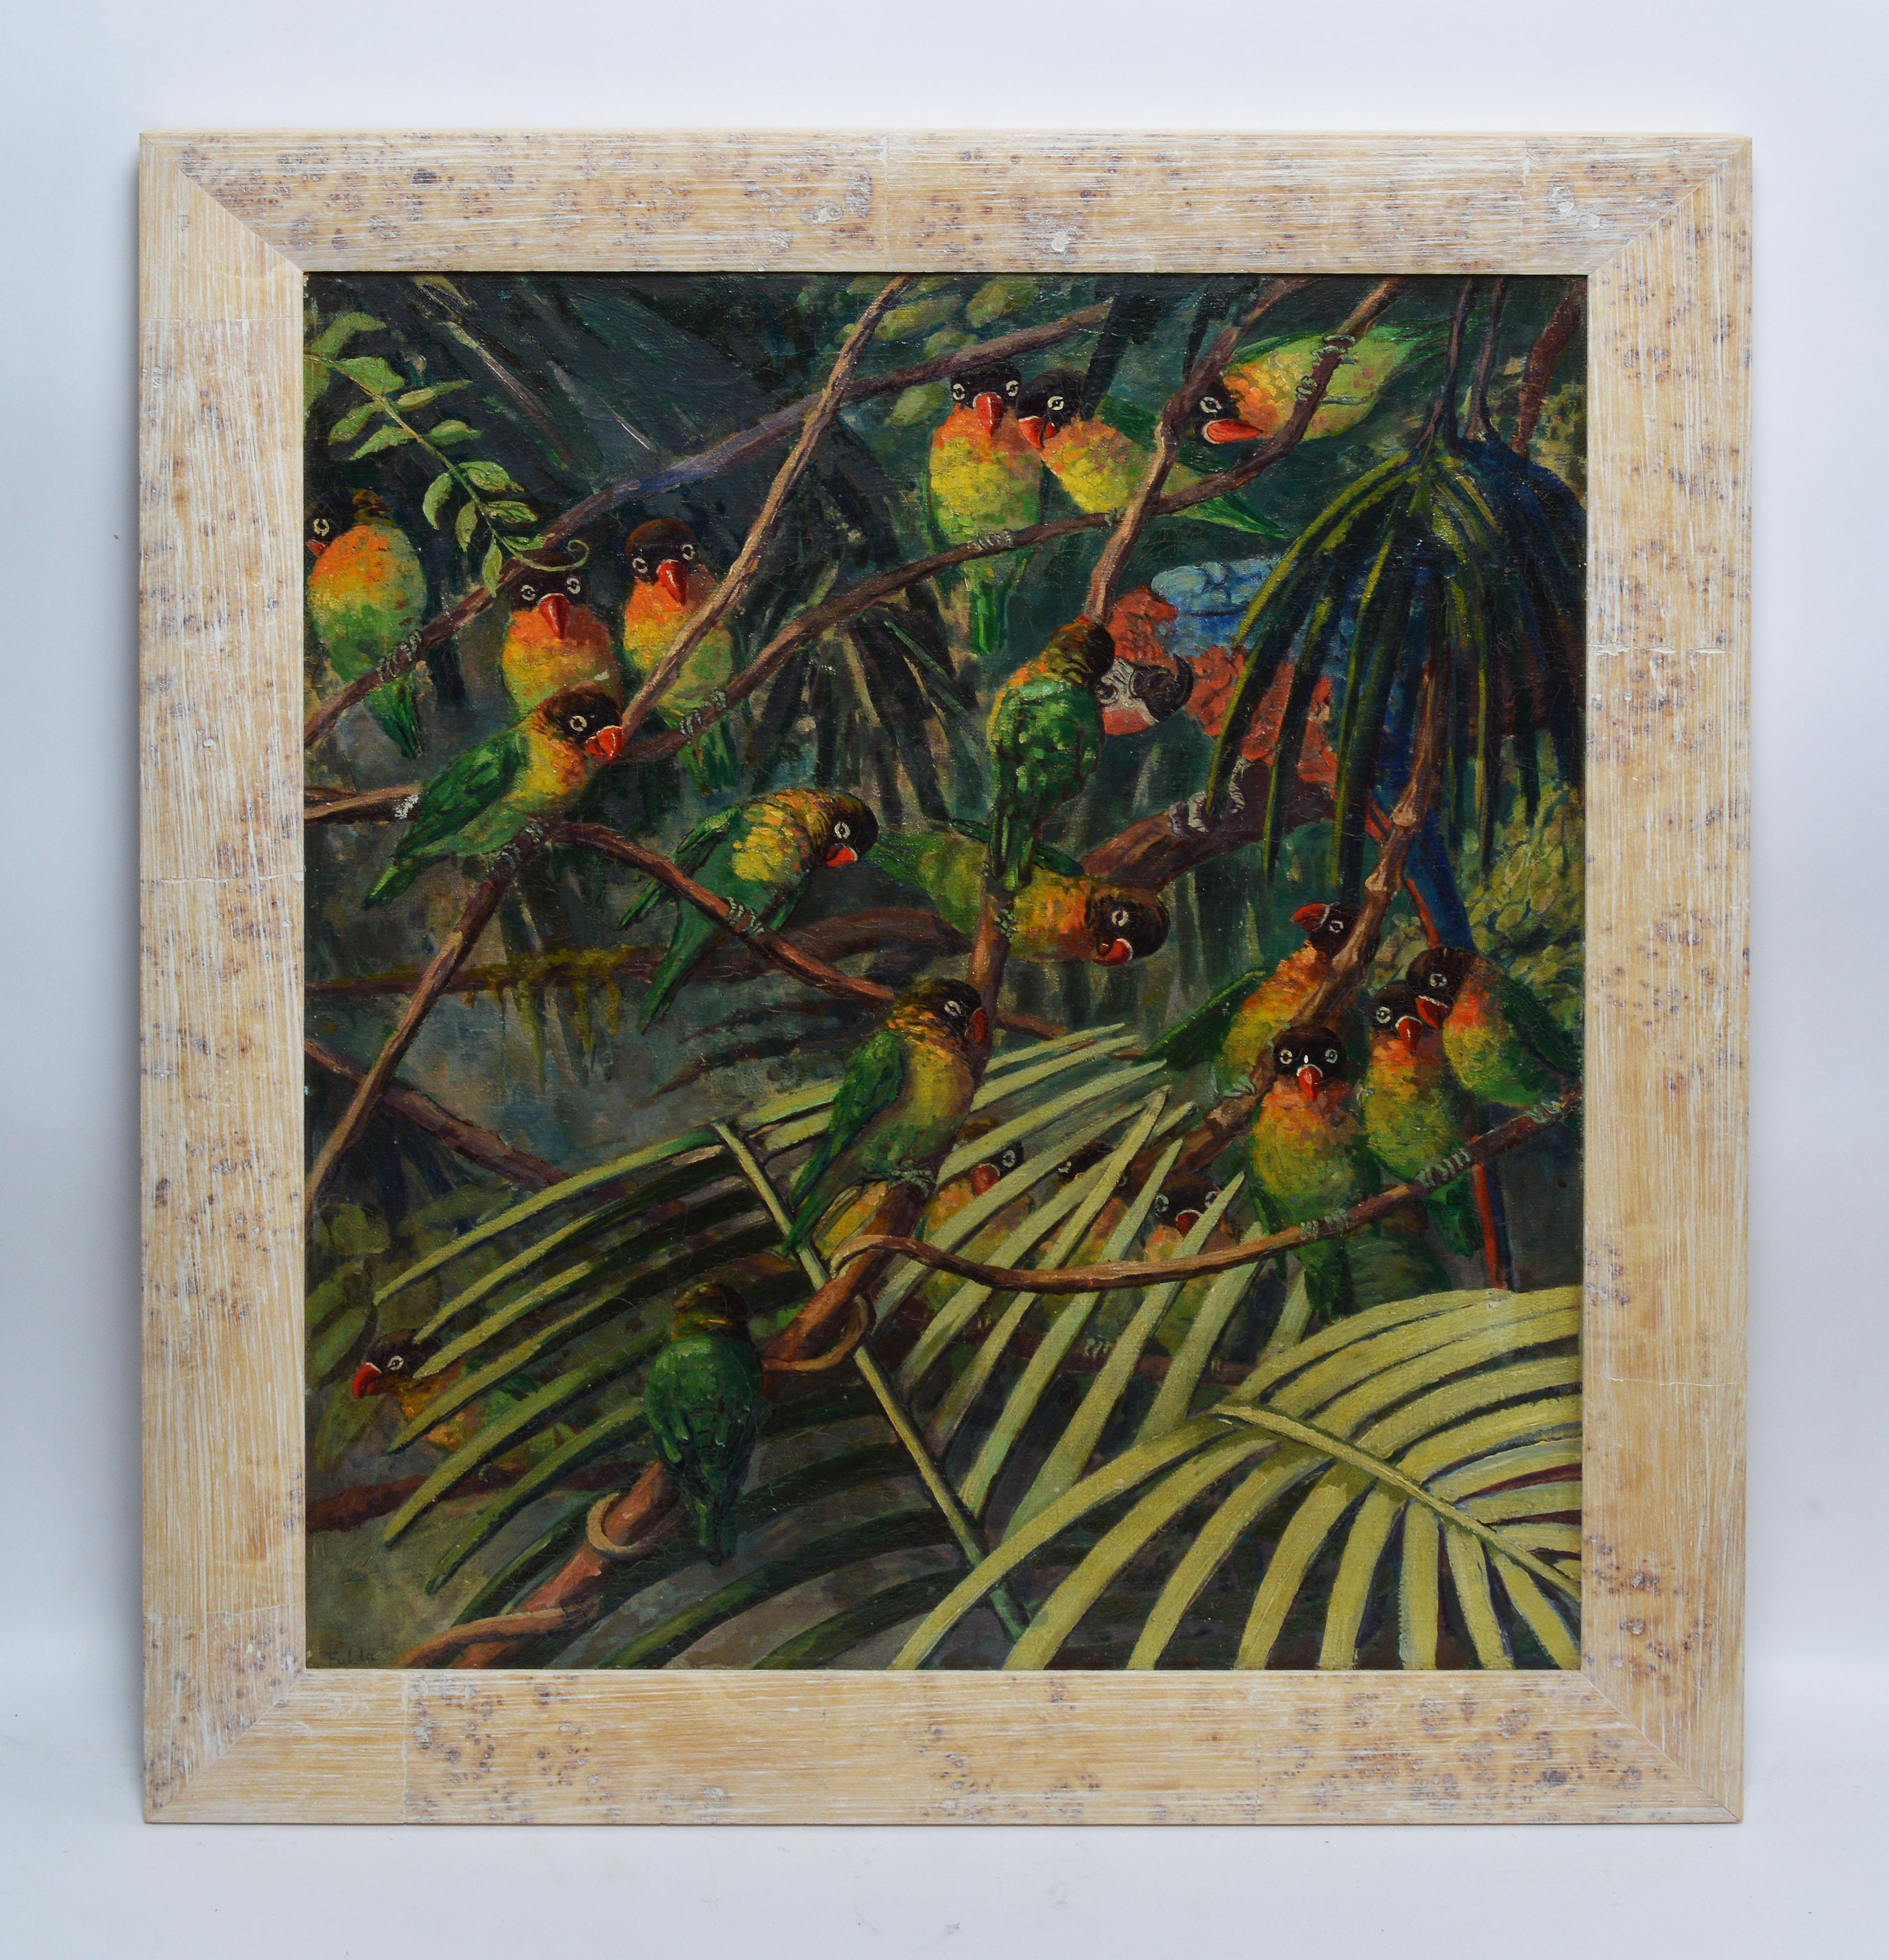 Antique American Impressionist Oil Painting of Tropical Birds by Elizabeth Fulda 1